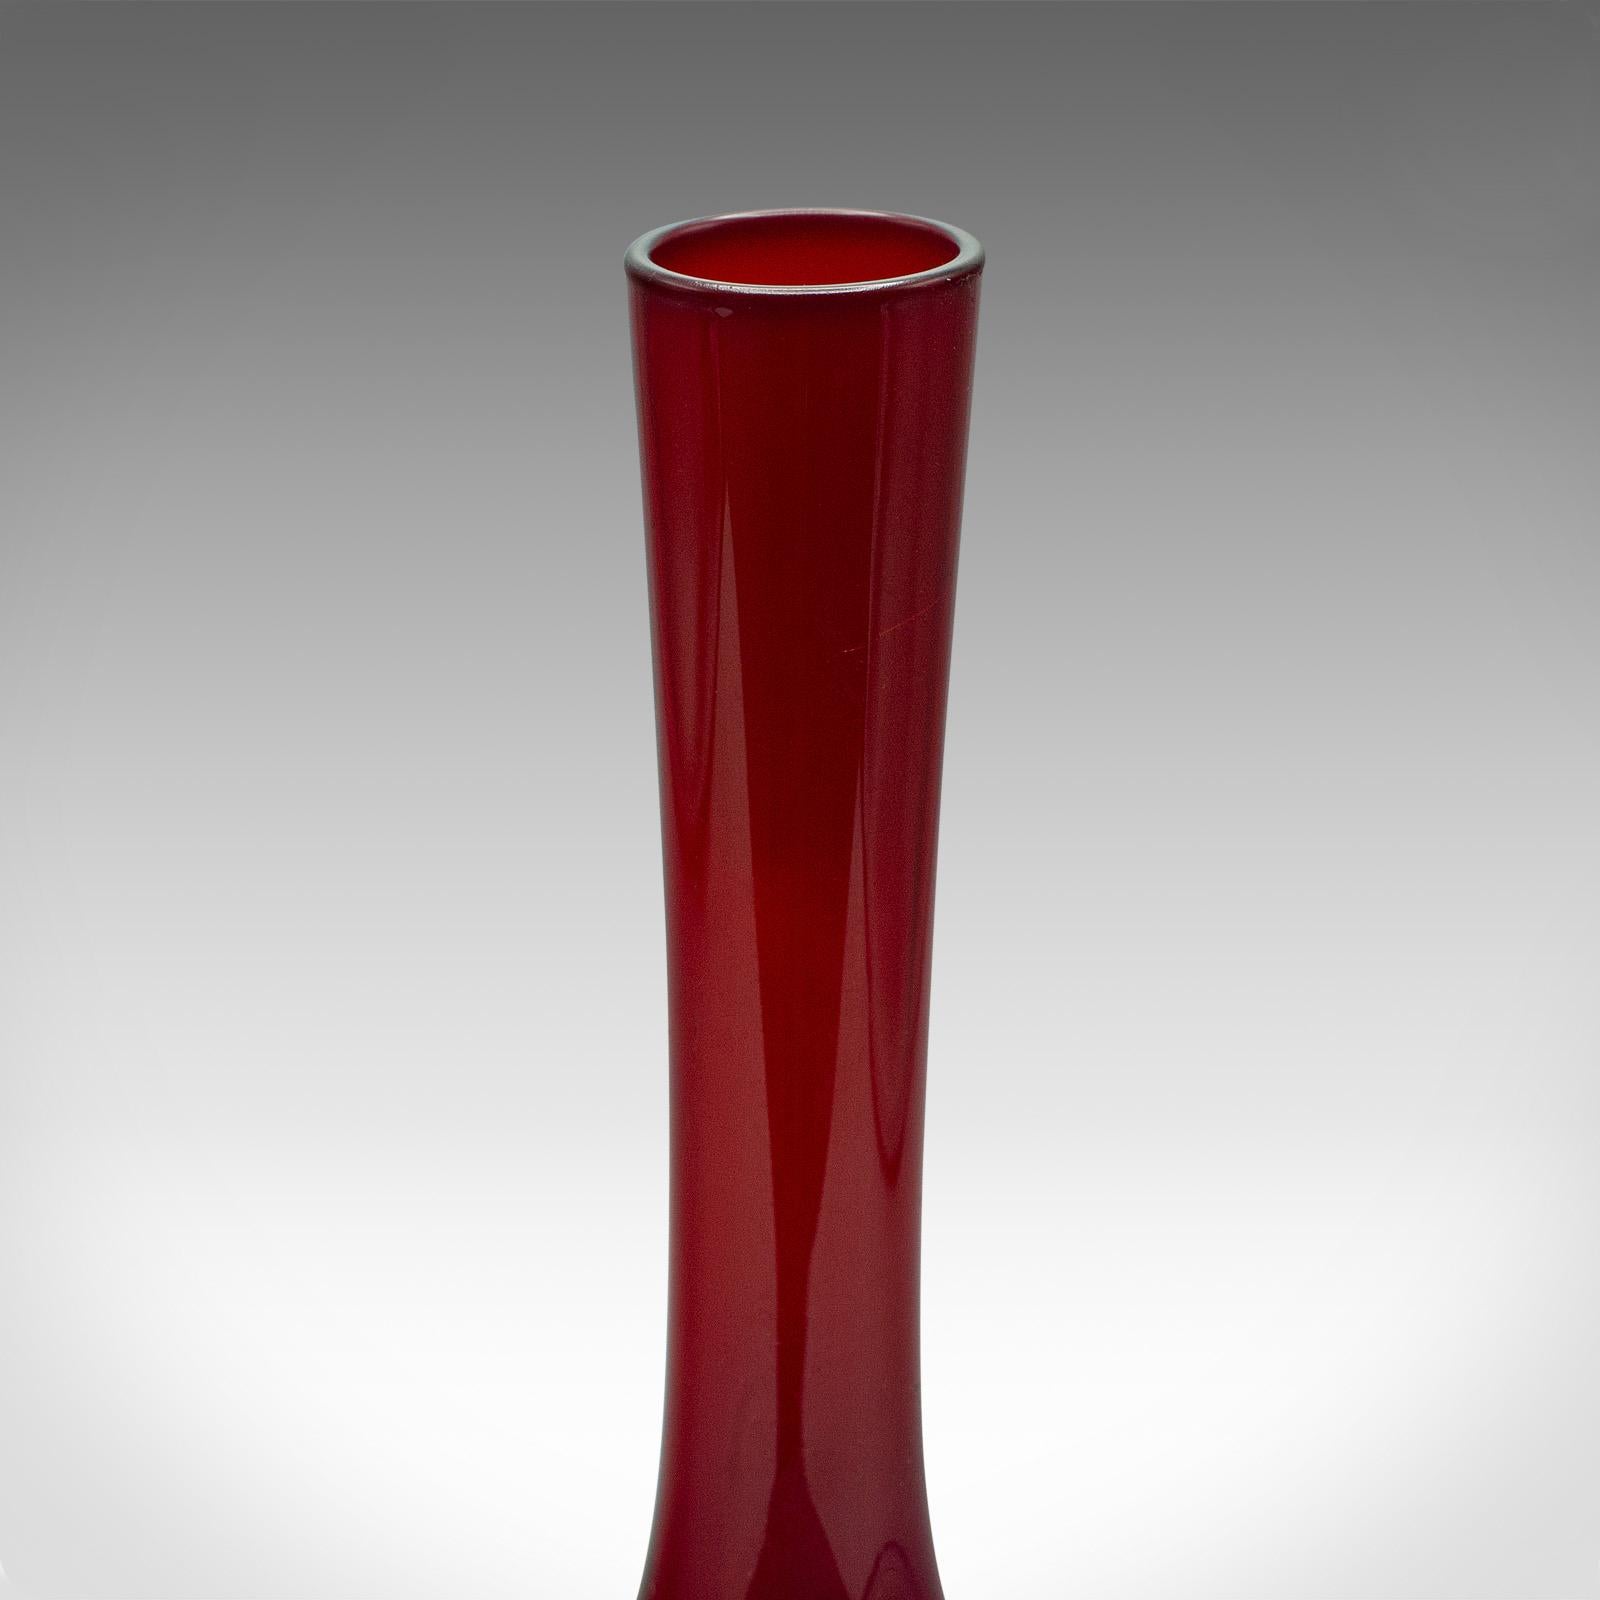 Vintage Narrow Stem Vase, Scandinavian, Decorative Glass, Posy Sleeve, C.1960 For Sale 4